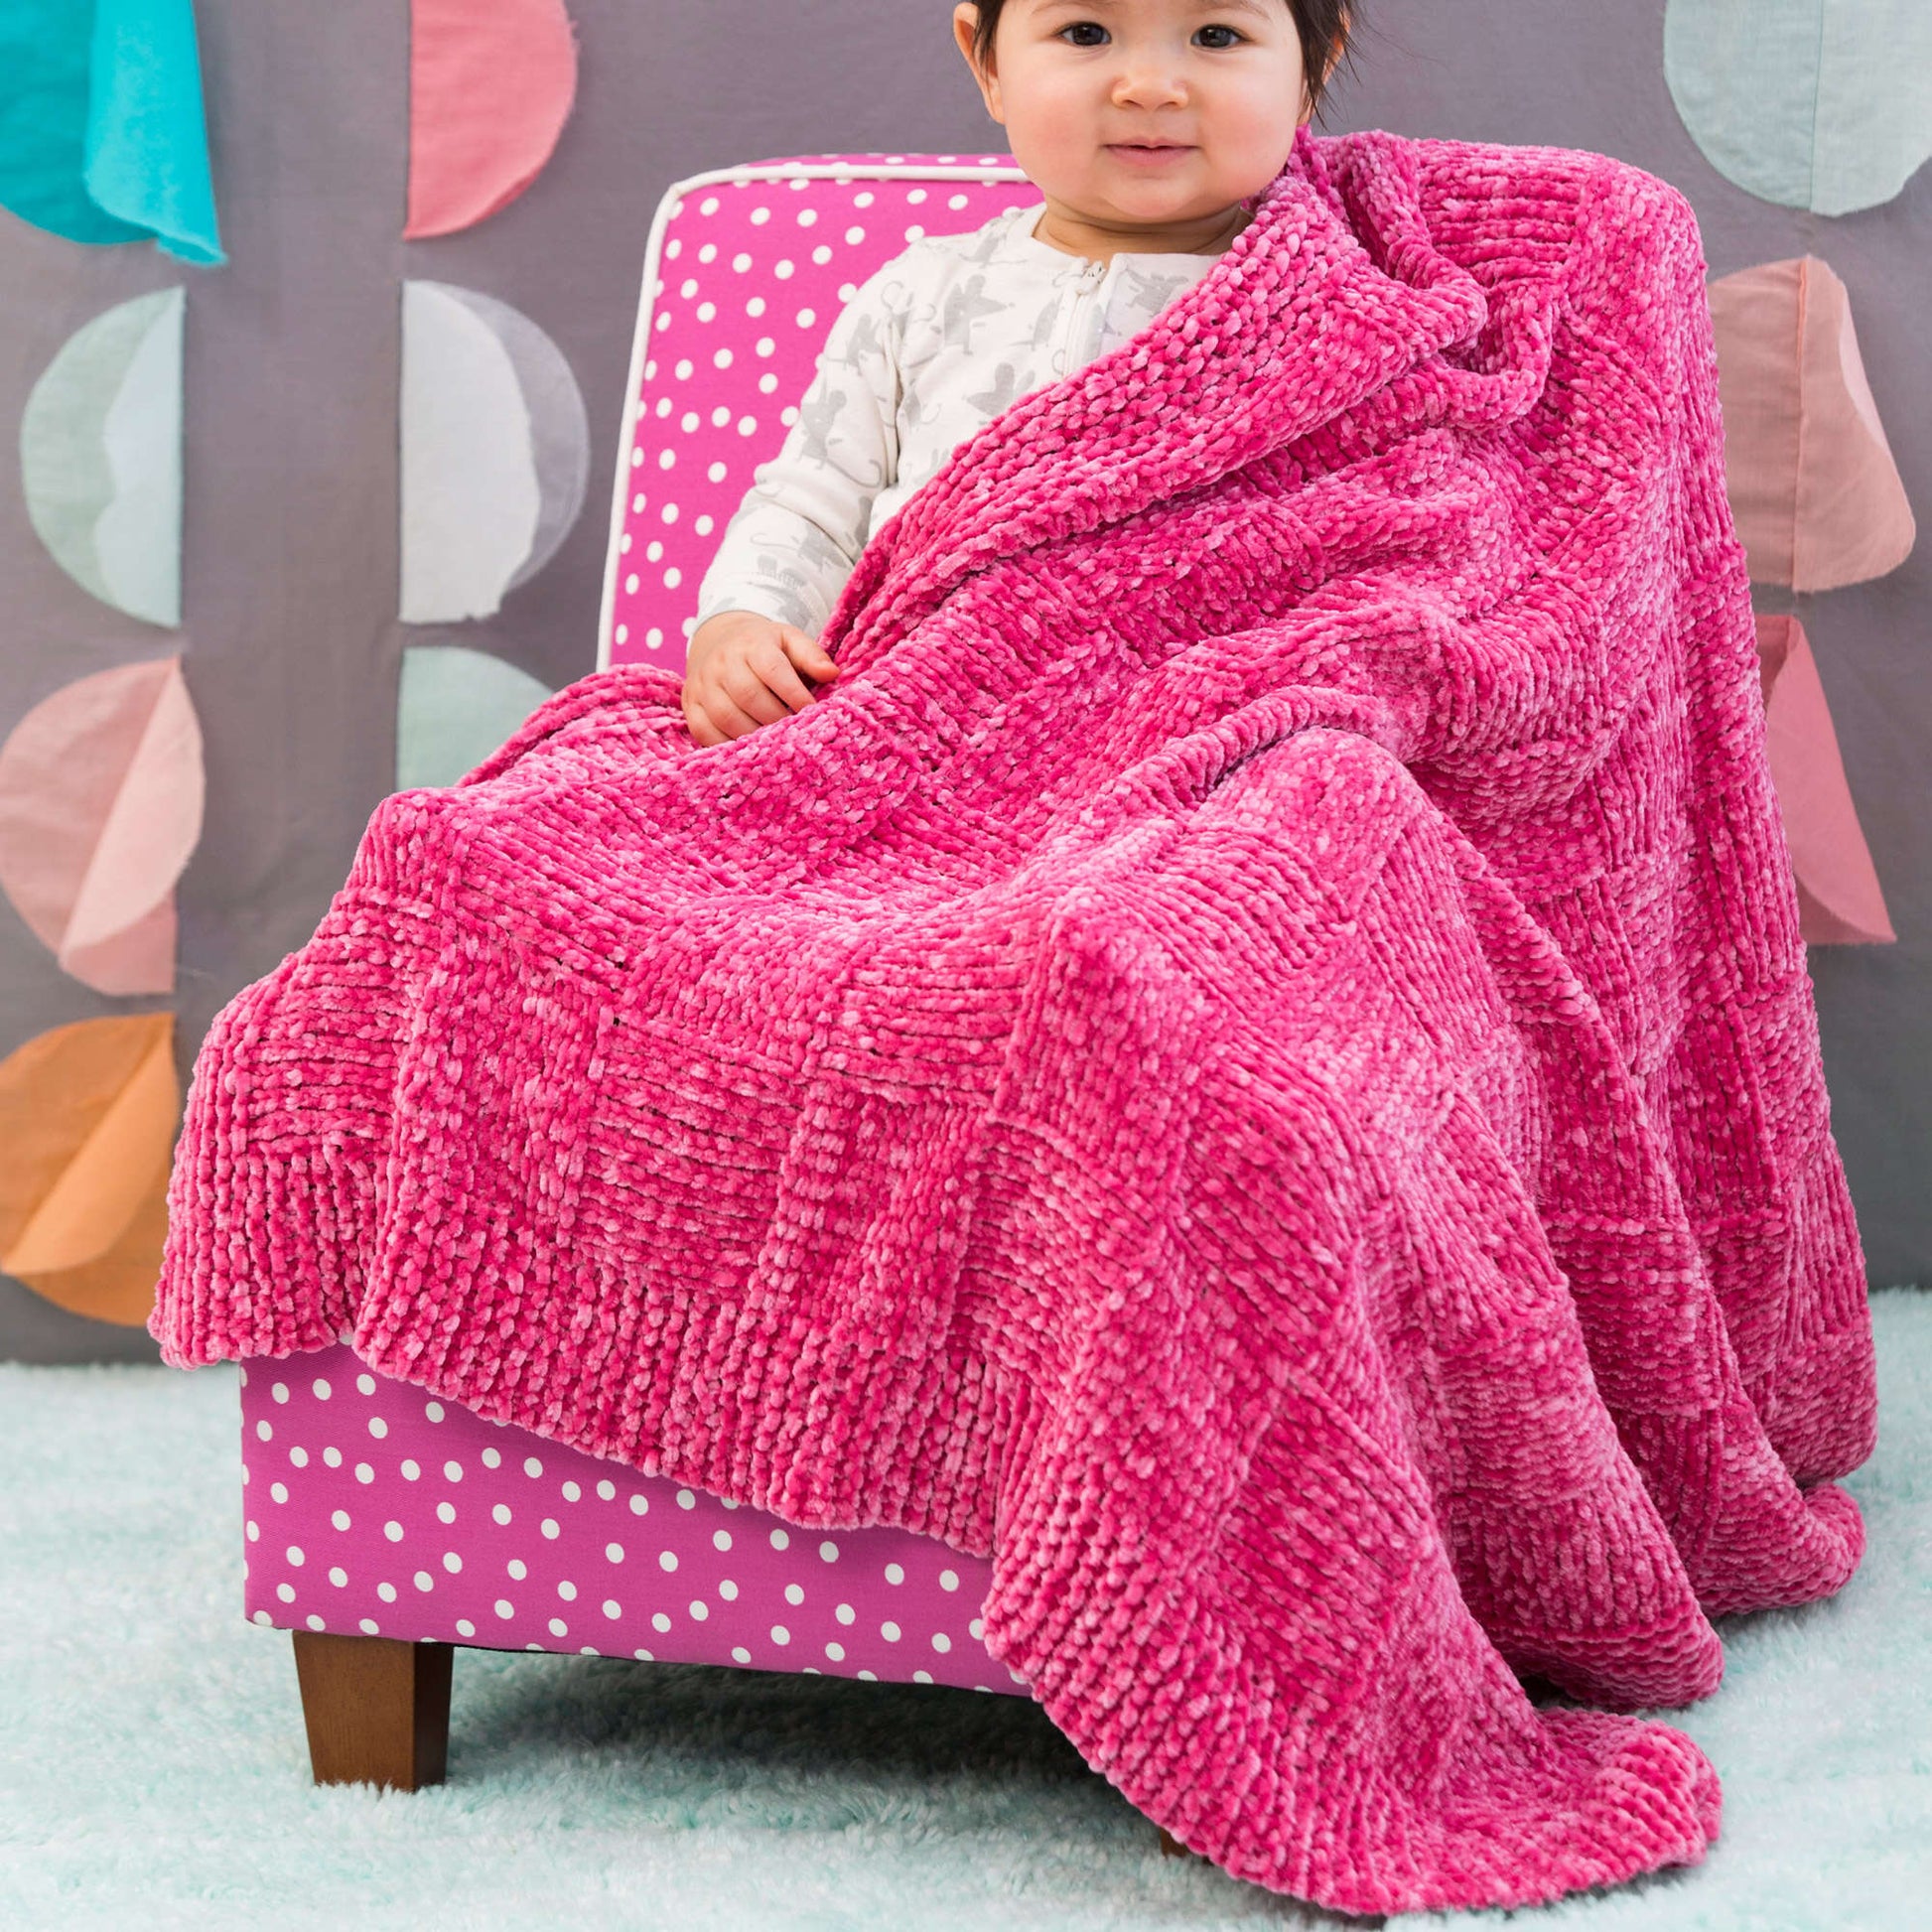 Free Red Heart Basketweave Knit Baby Blanket Pattern